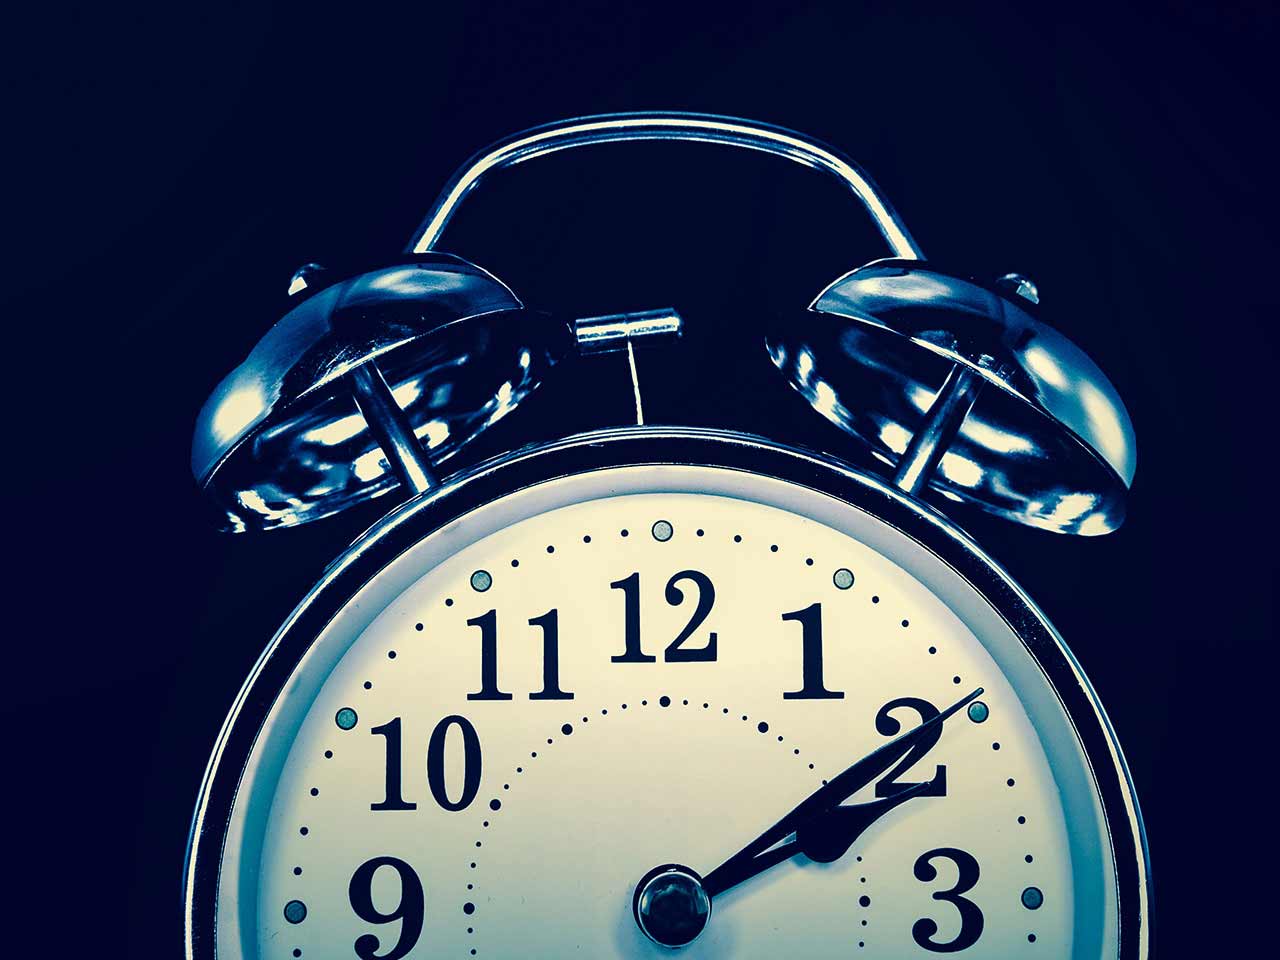 Retro alarm clock set to two o'clock symbolising insomnia